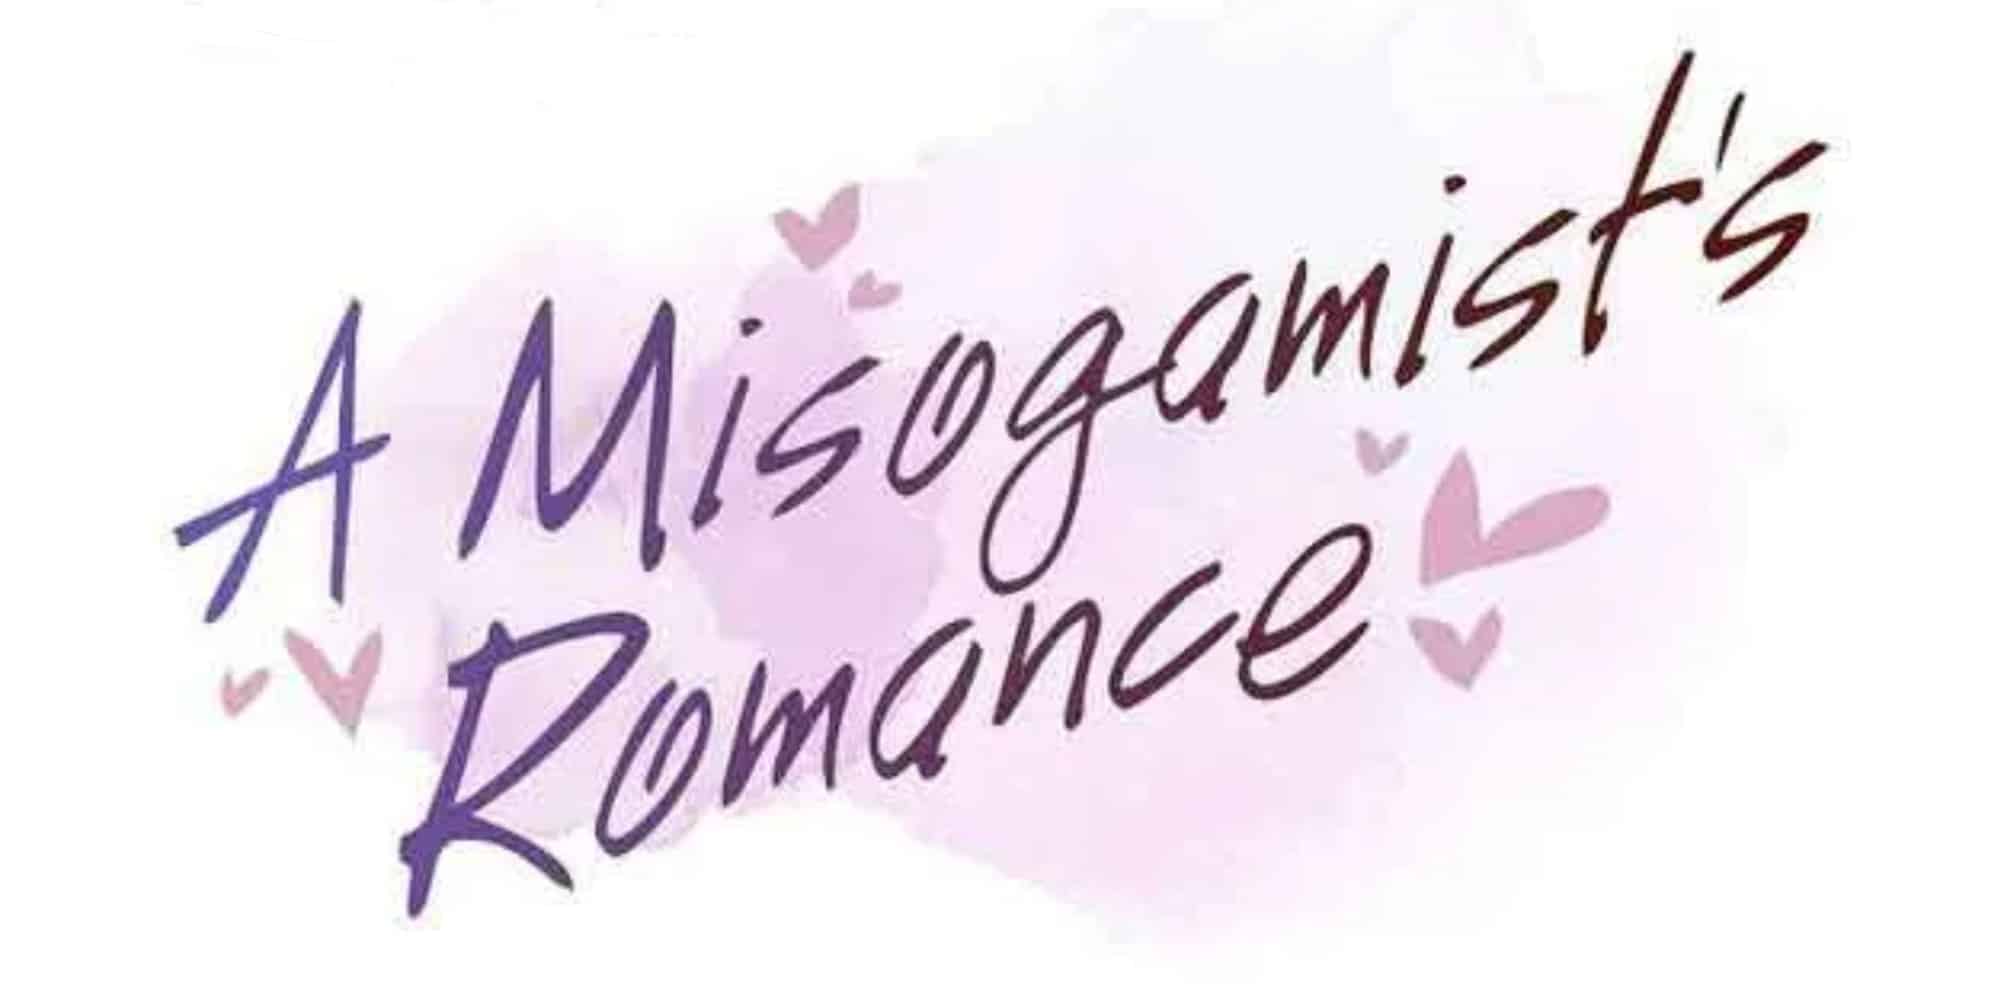 A Misogamist's Romance